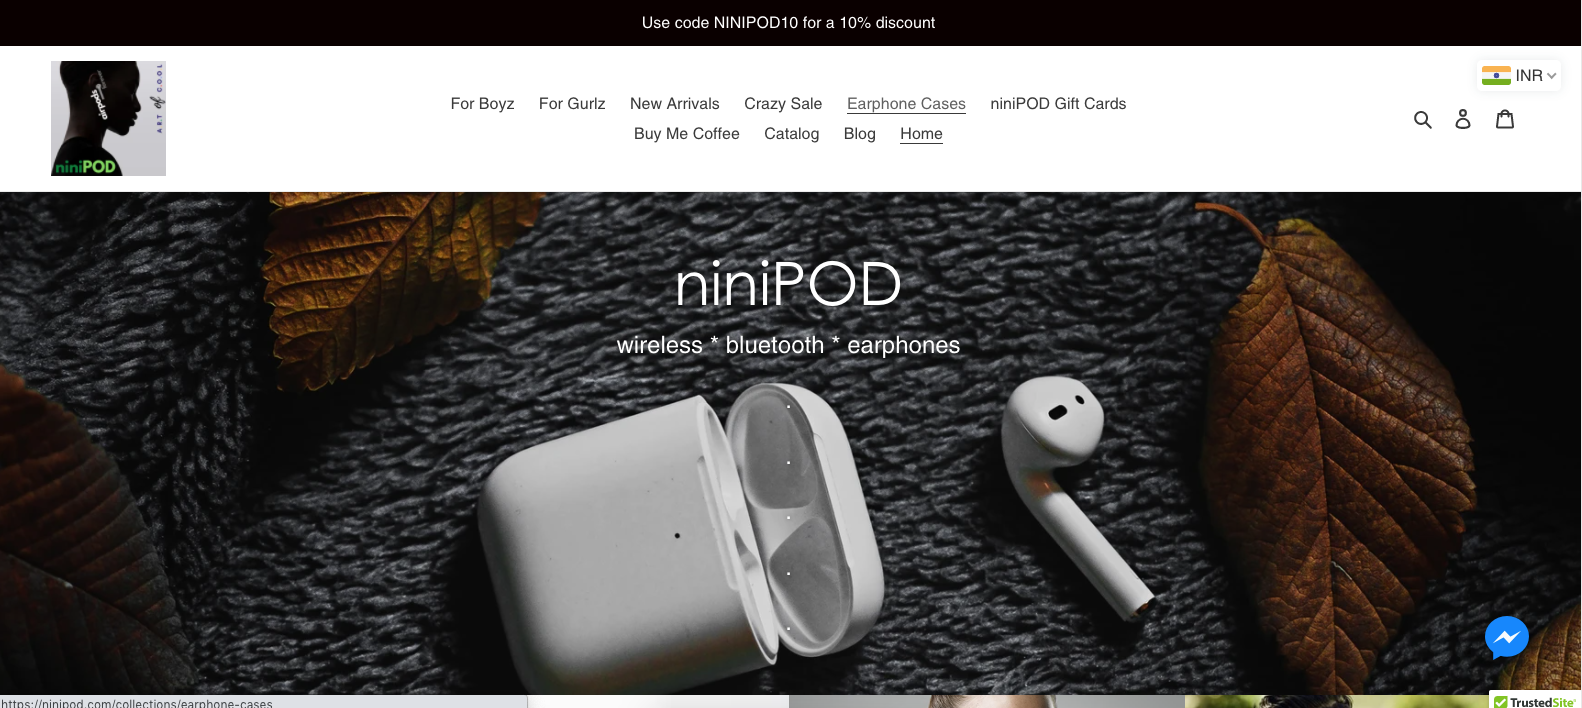 ninipod.com website